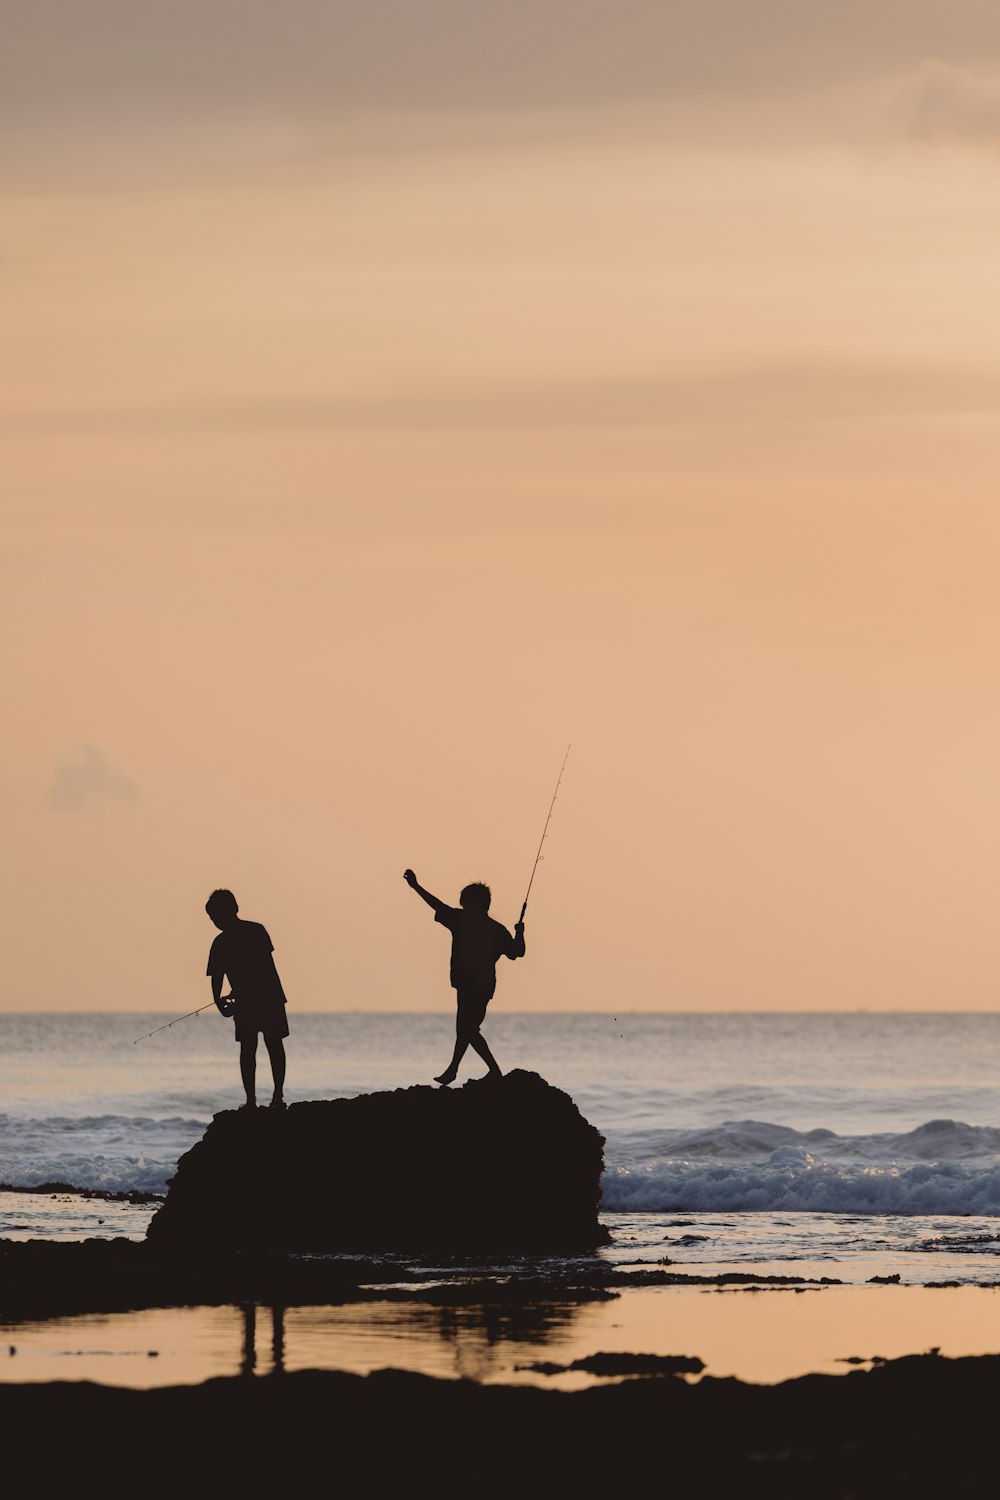 Silhouette of 2 men fishing on beach during sunset photo – Free Brown Image  on Unsplash